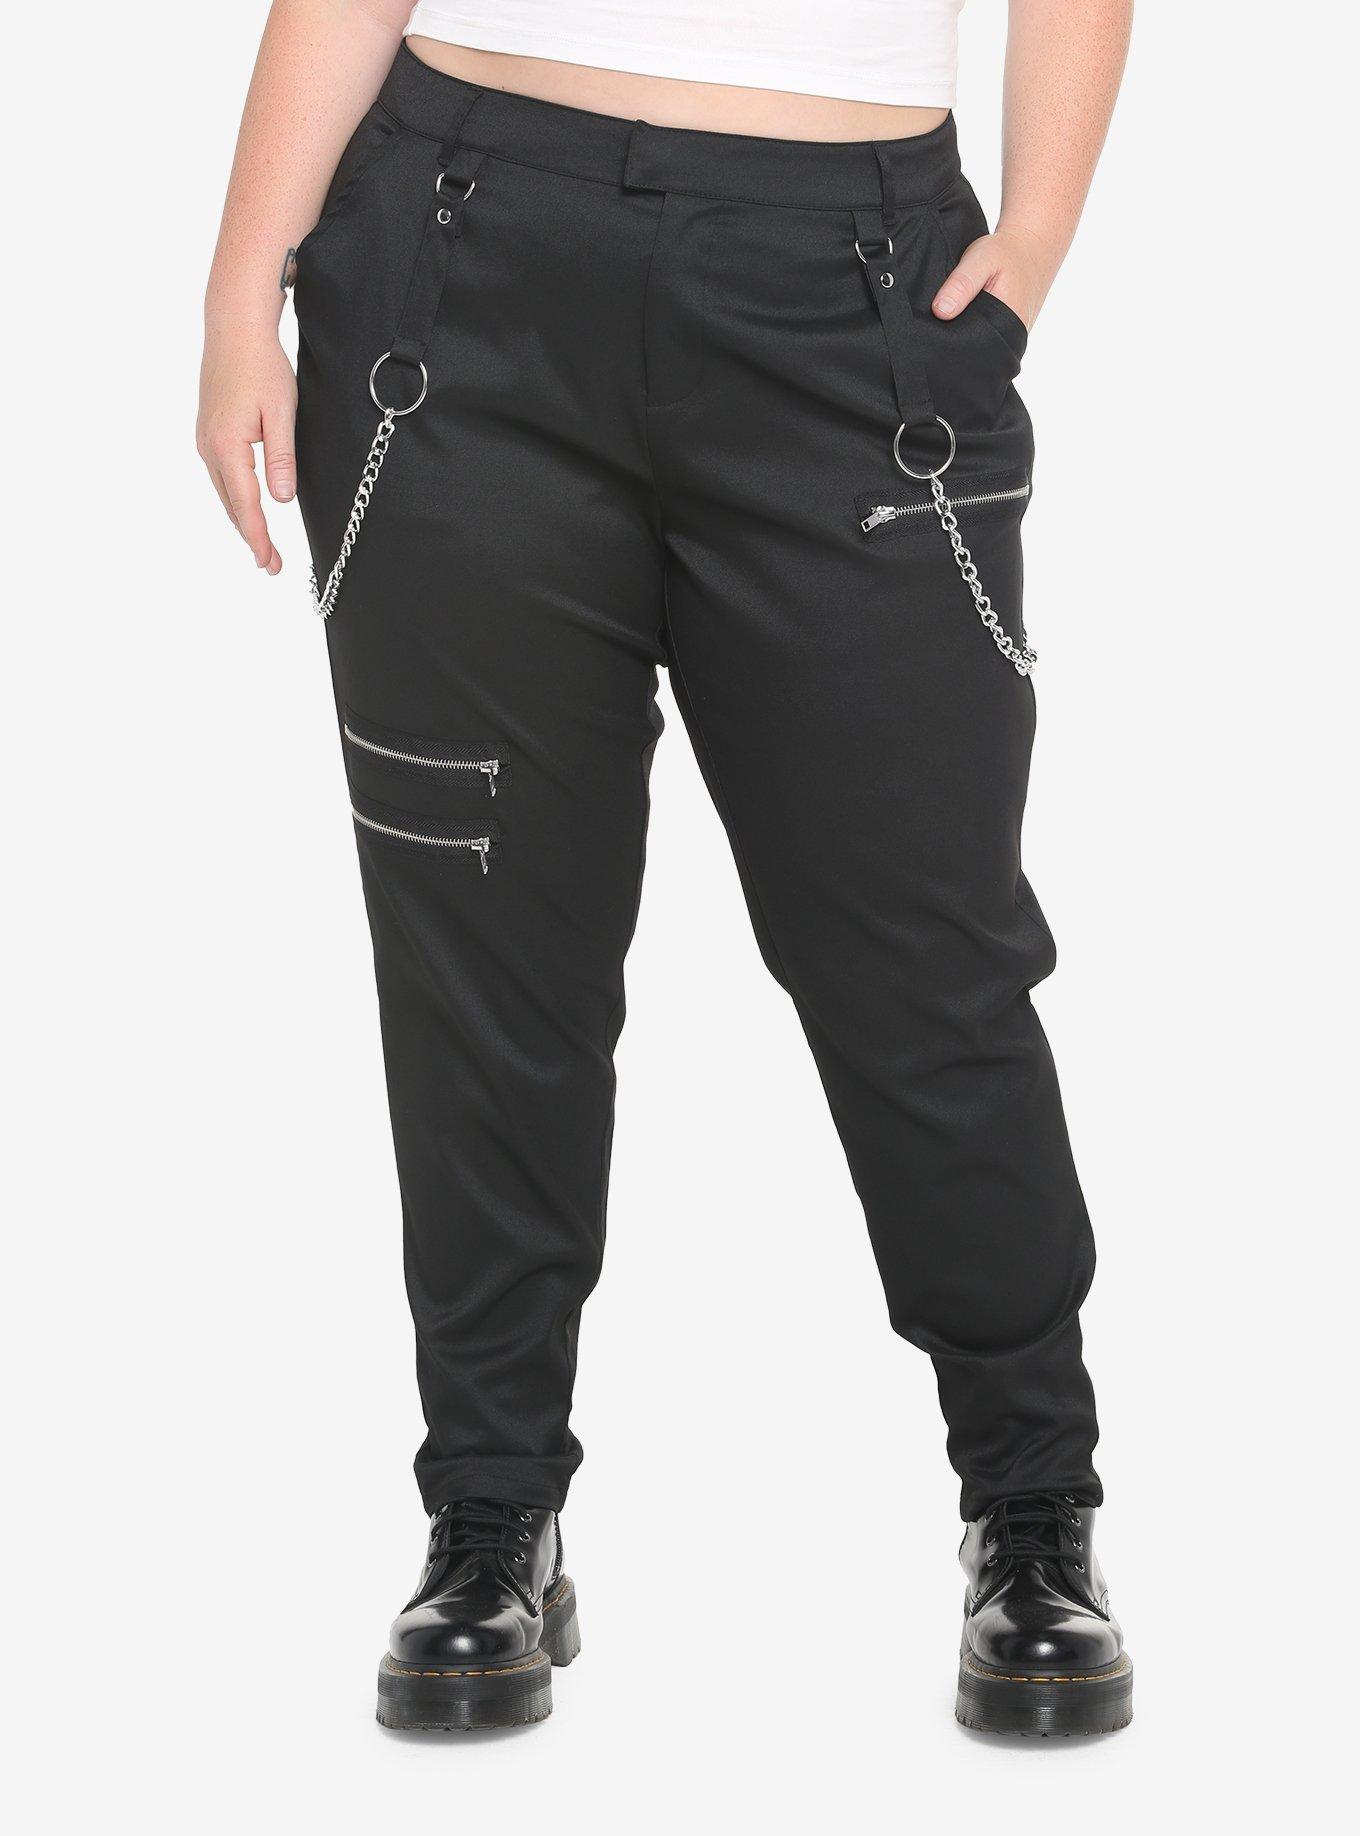 Black Chain Zipper Pants Plus Size